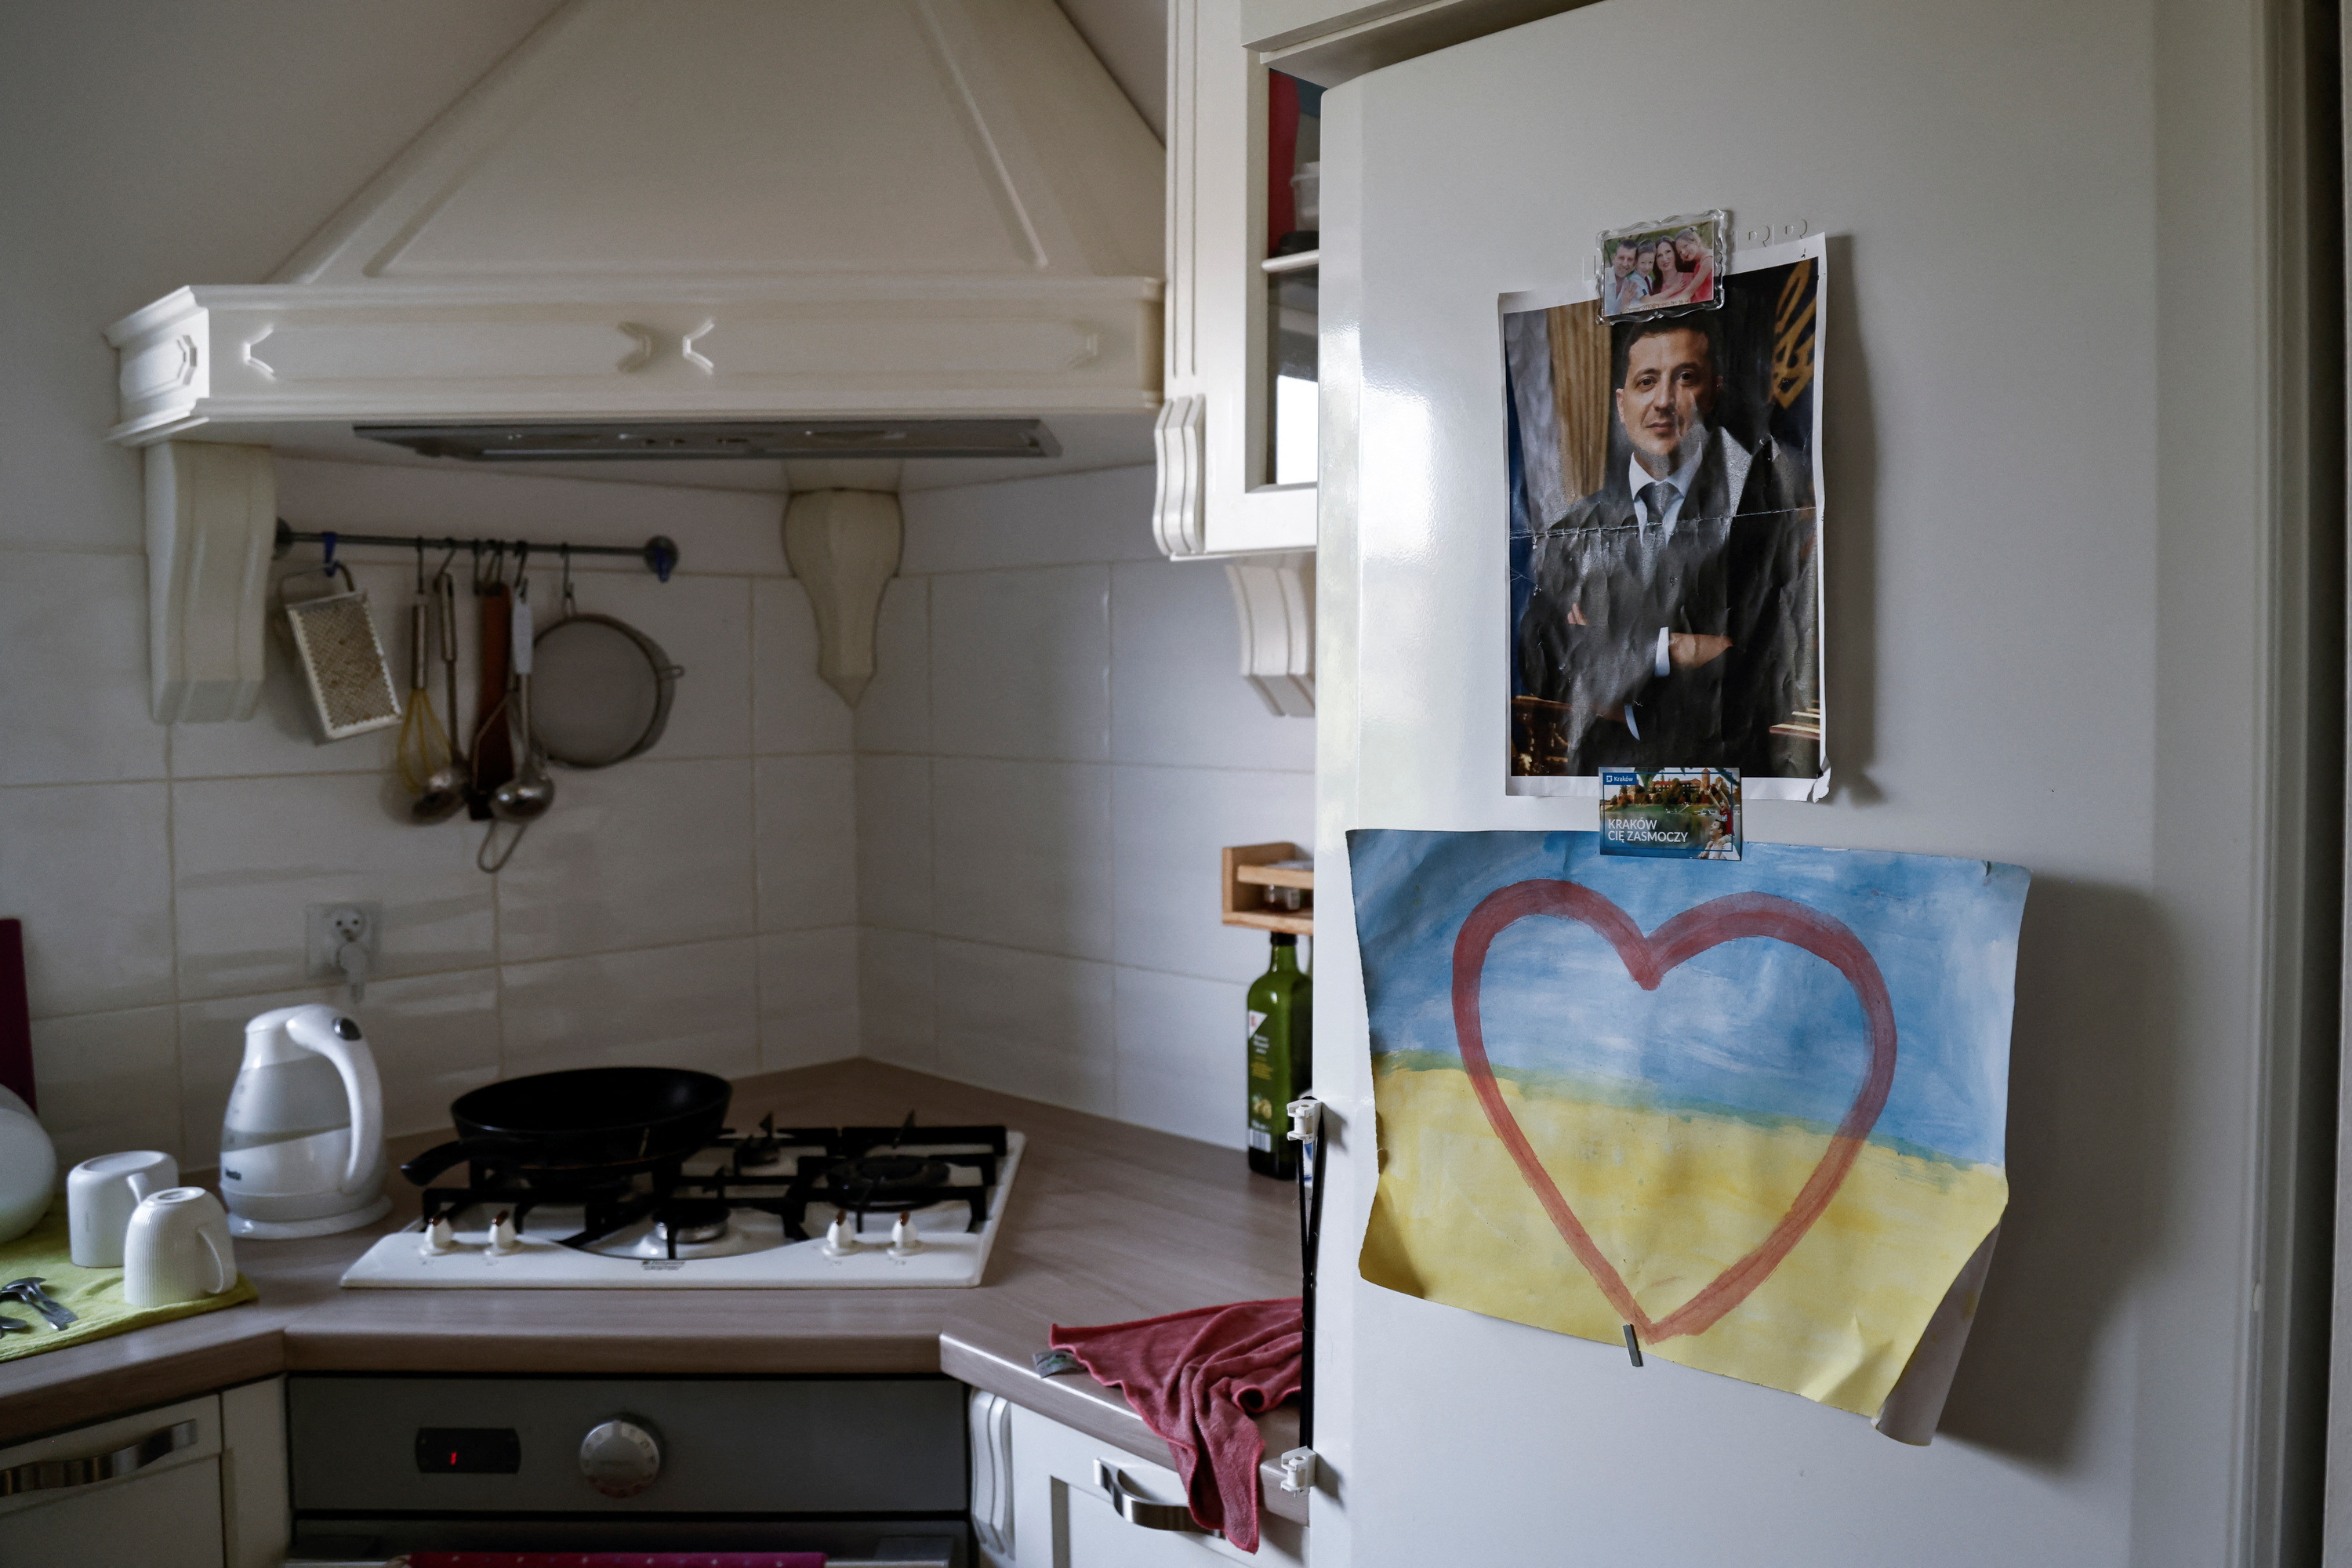 Six months into the war, Ukrainian refugee torn about returning